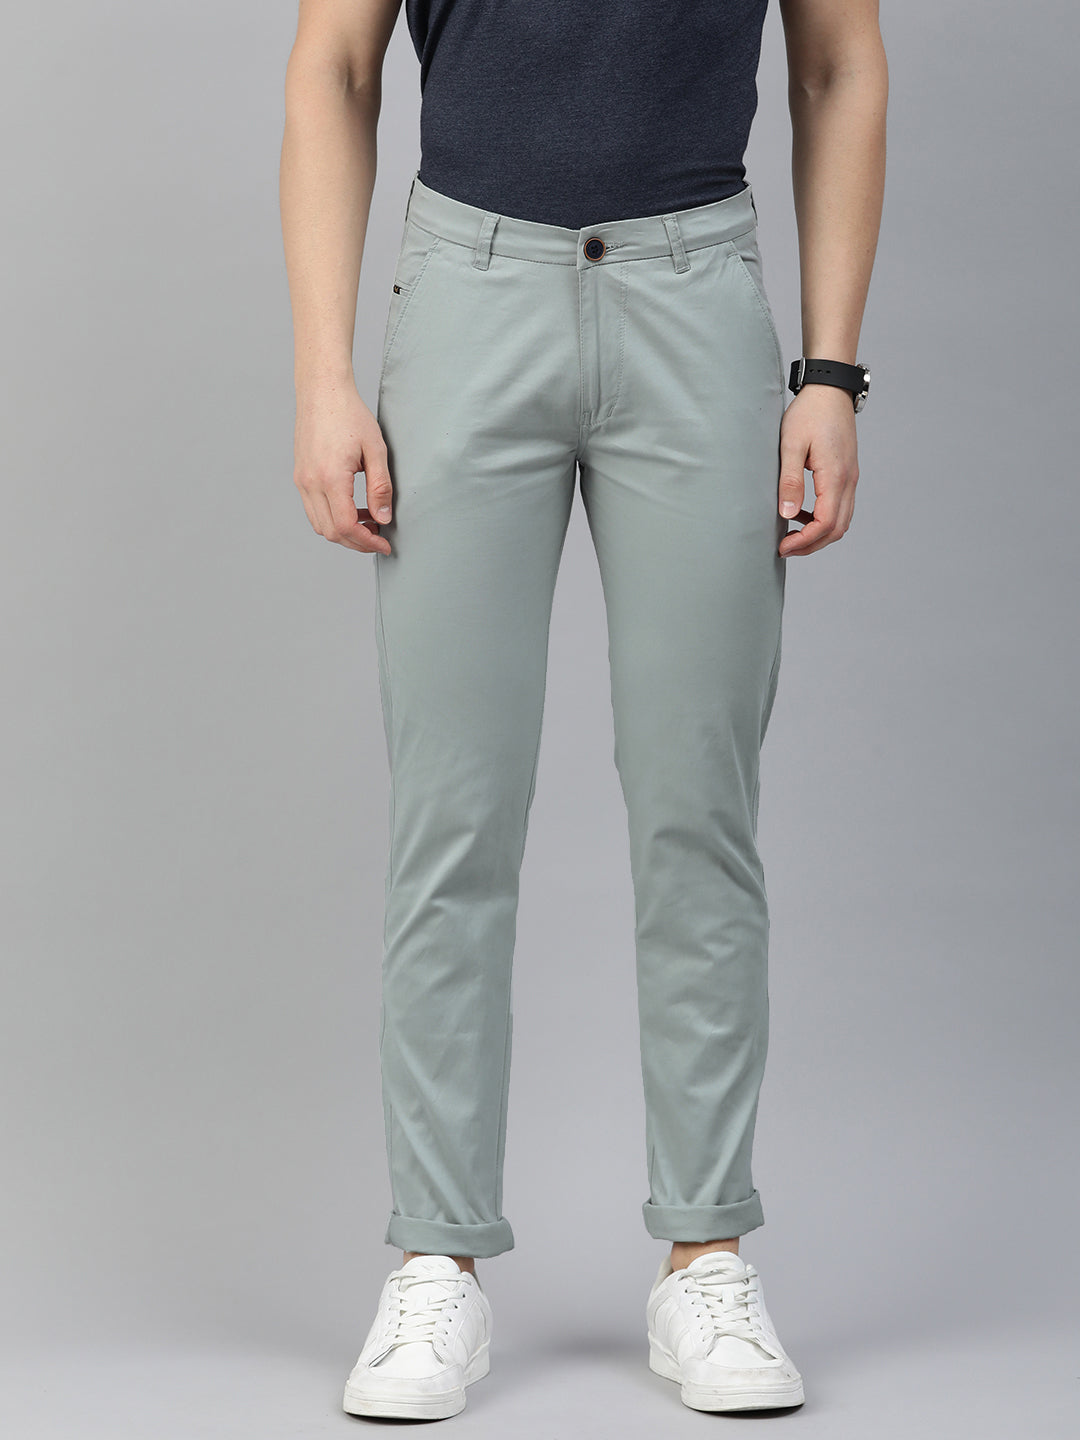 Timeless Men's Trousers for Effortless Elegance - Ash Blue